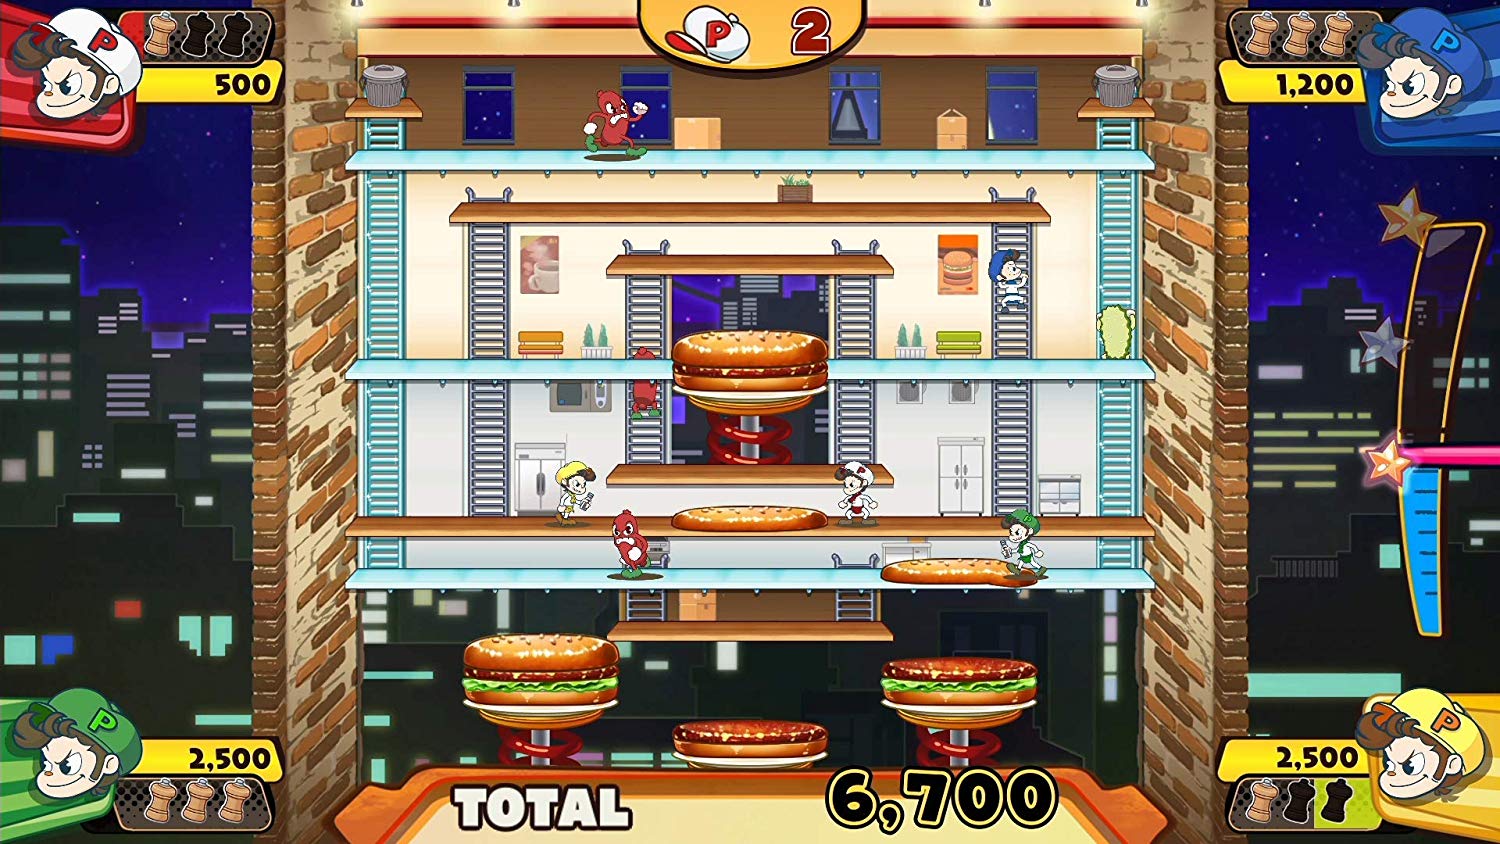 boom reviews BurgerTime Party!